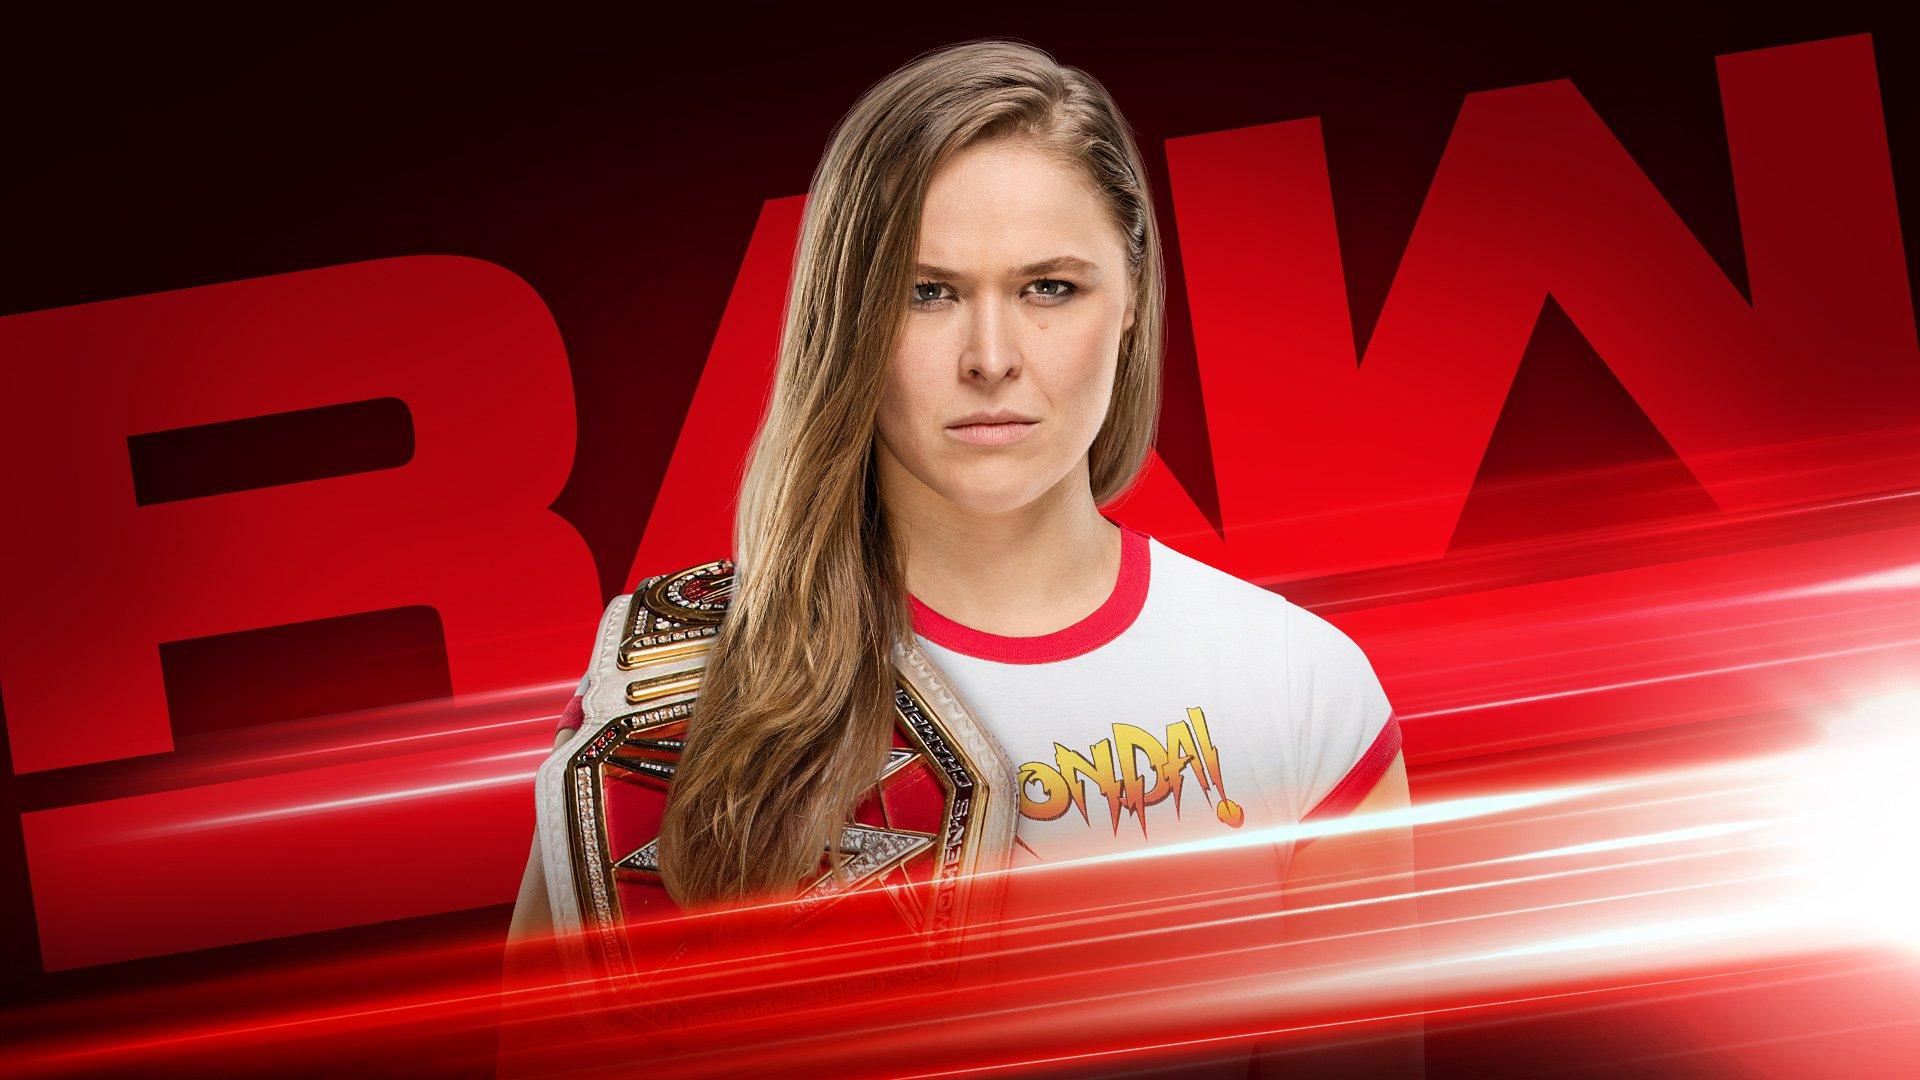 WWE Raw Women's Champion Ronda Rousey Wallpaper & Image